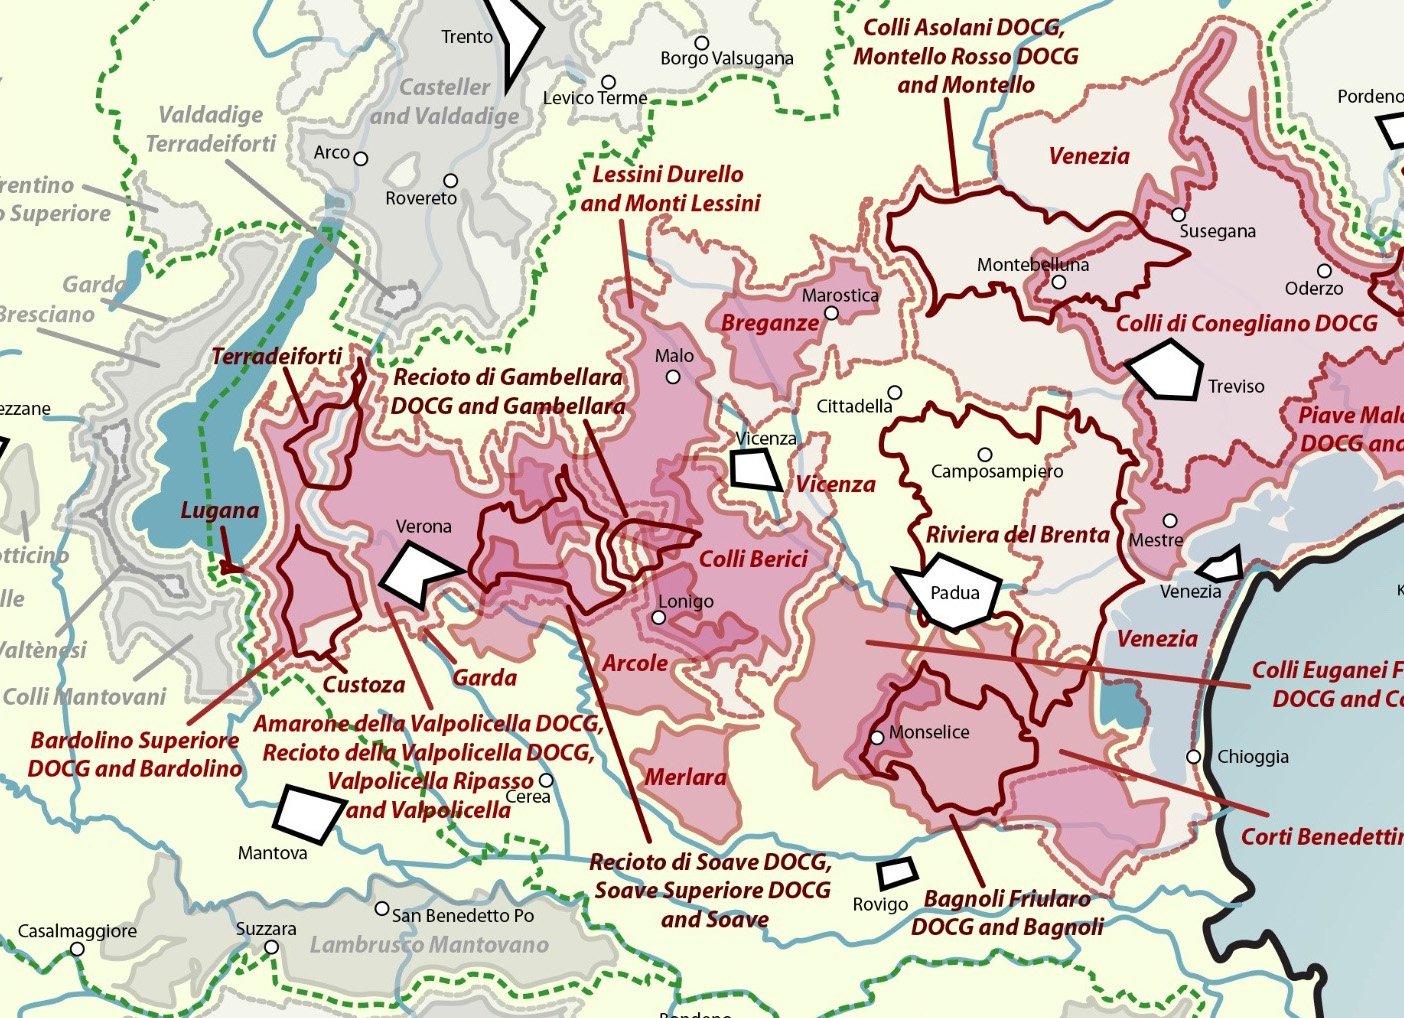 Veneto wine region showing Valpolicella